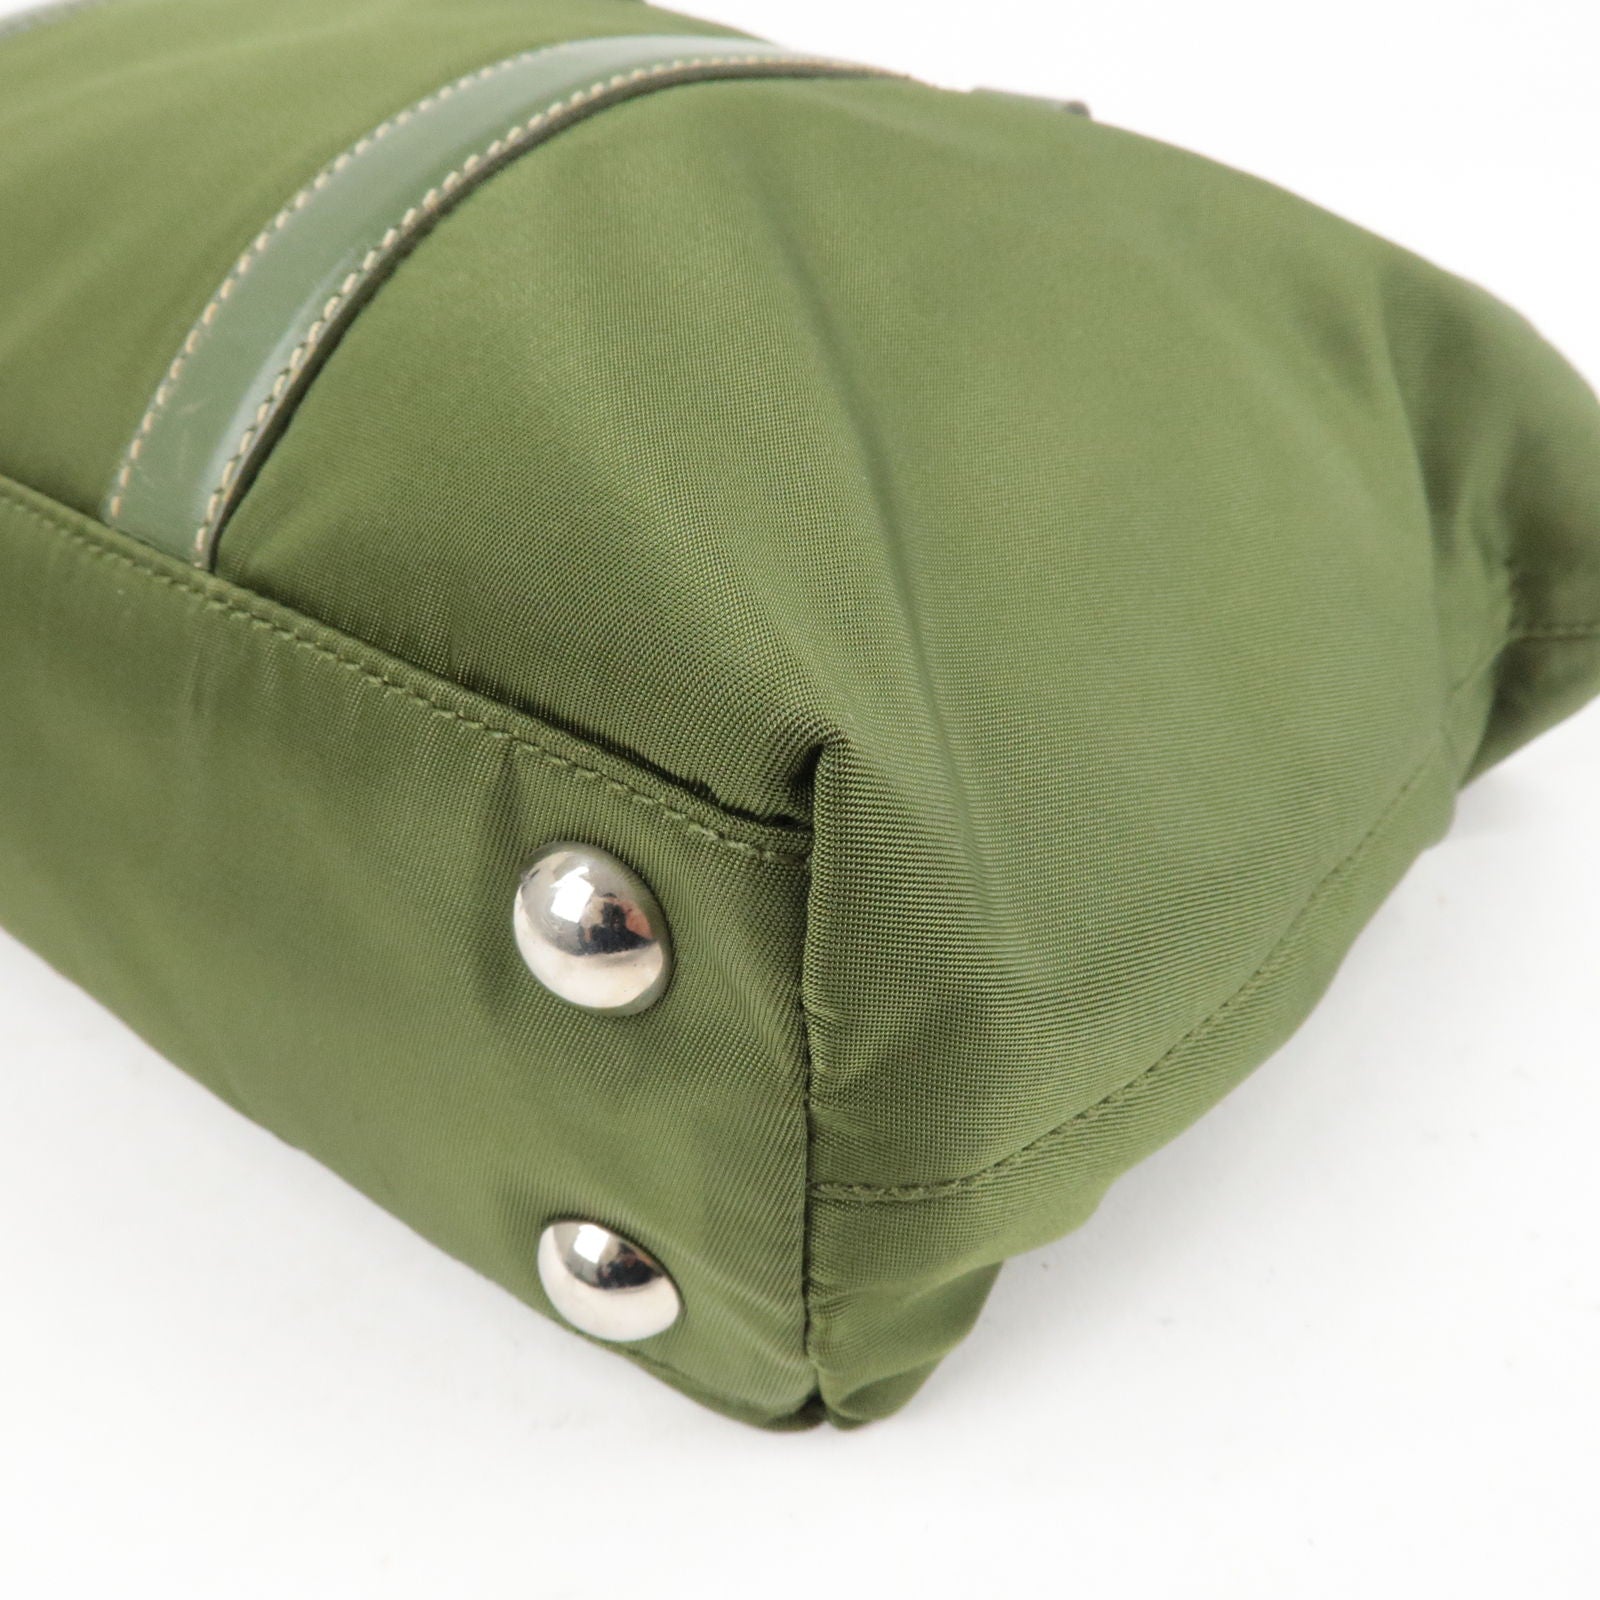 PRADA Unisex Saffiano Nylon Street Style 2WAY Small Shoulder Bag